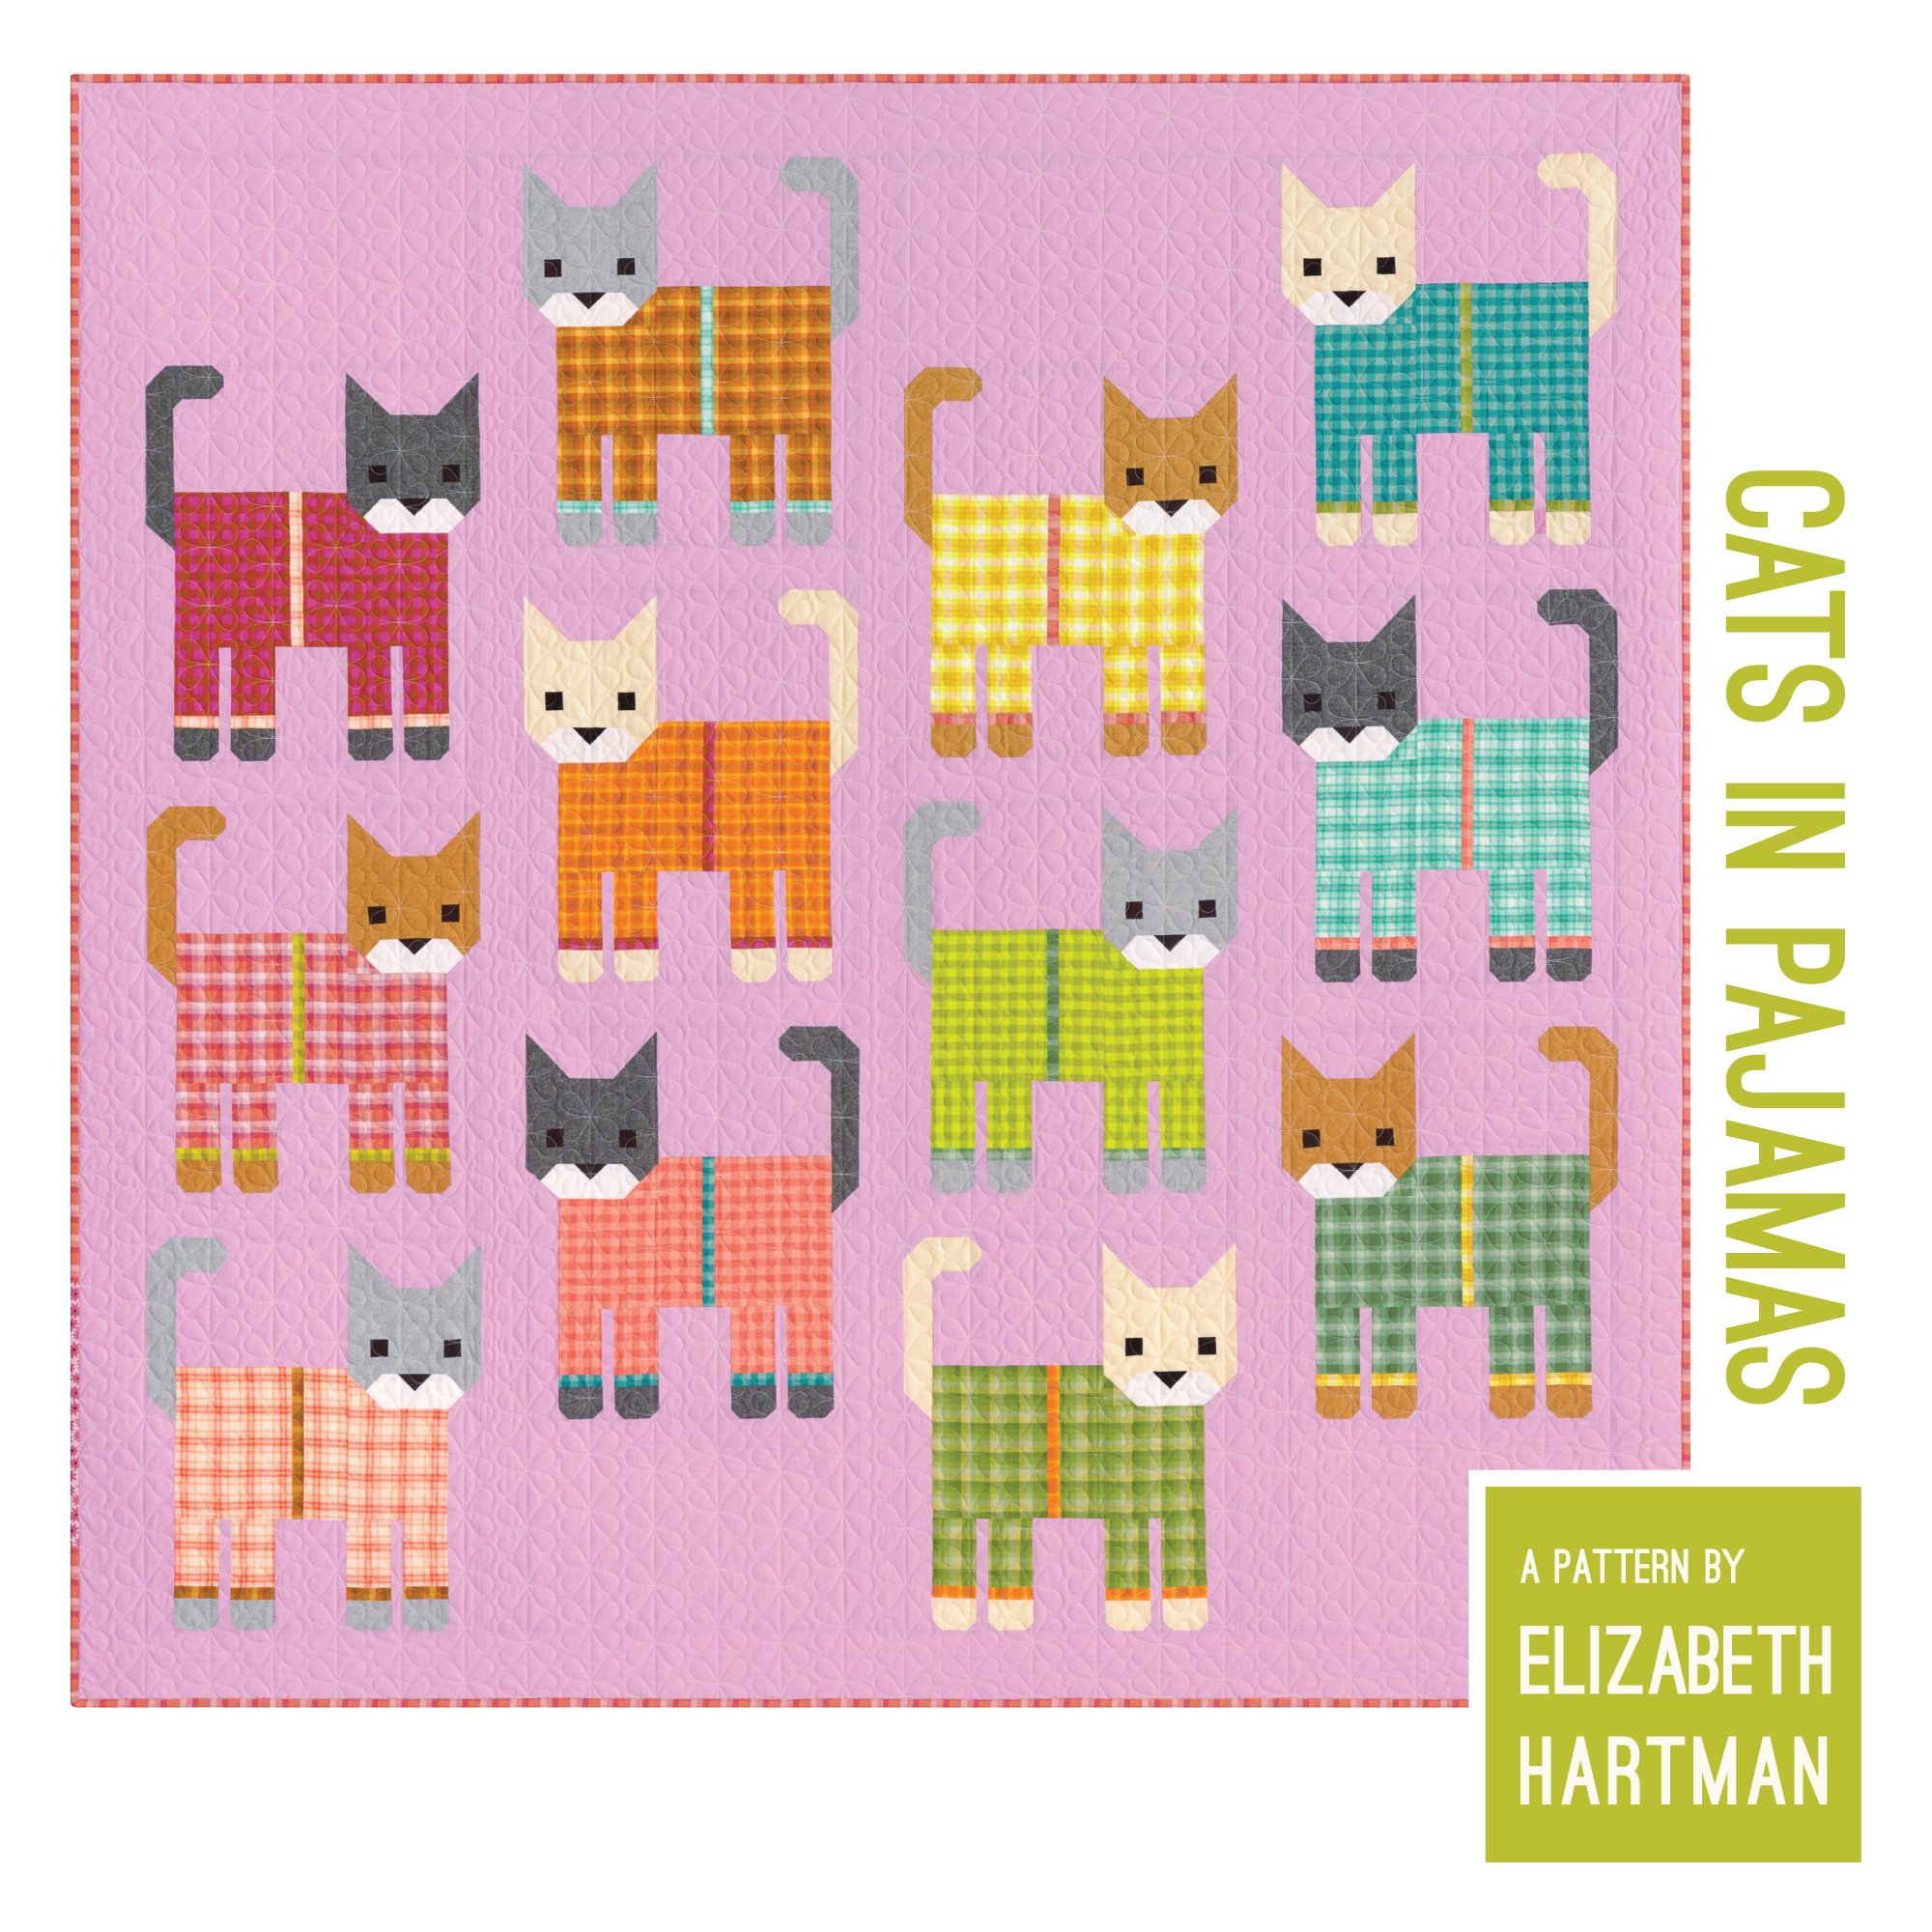 NEW PATTERNS & FABRIC! — Patterns by Elizabeth Hartman